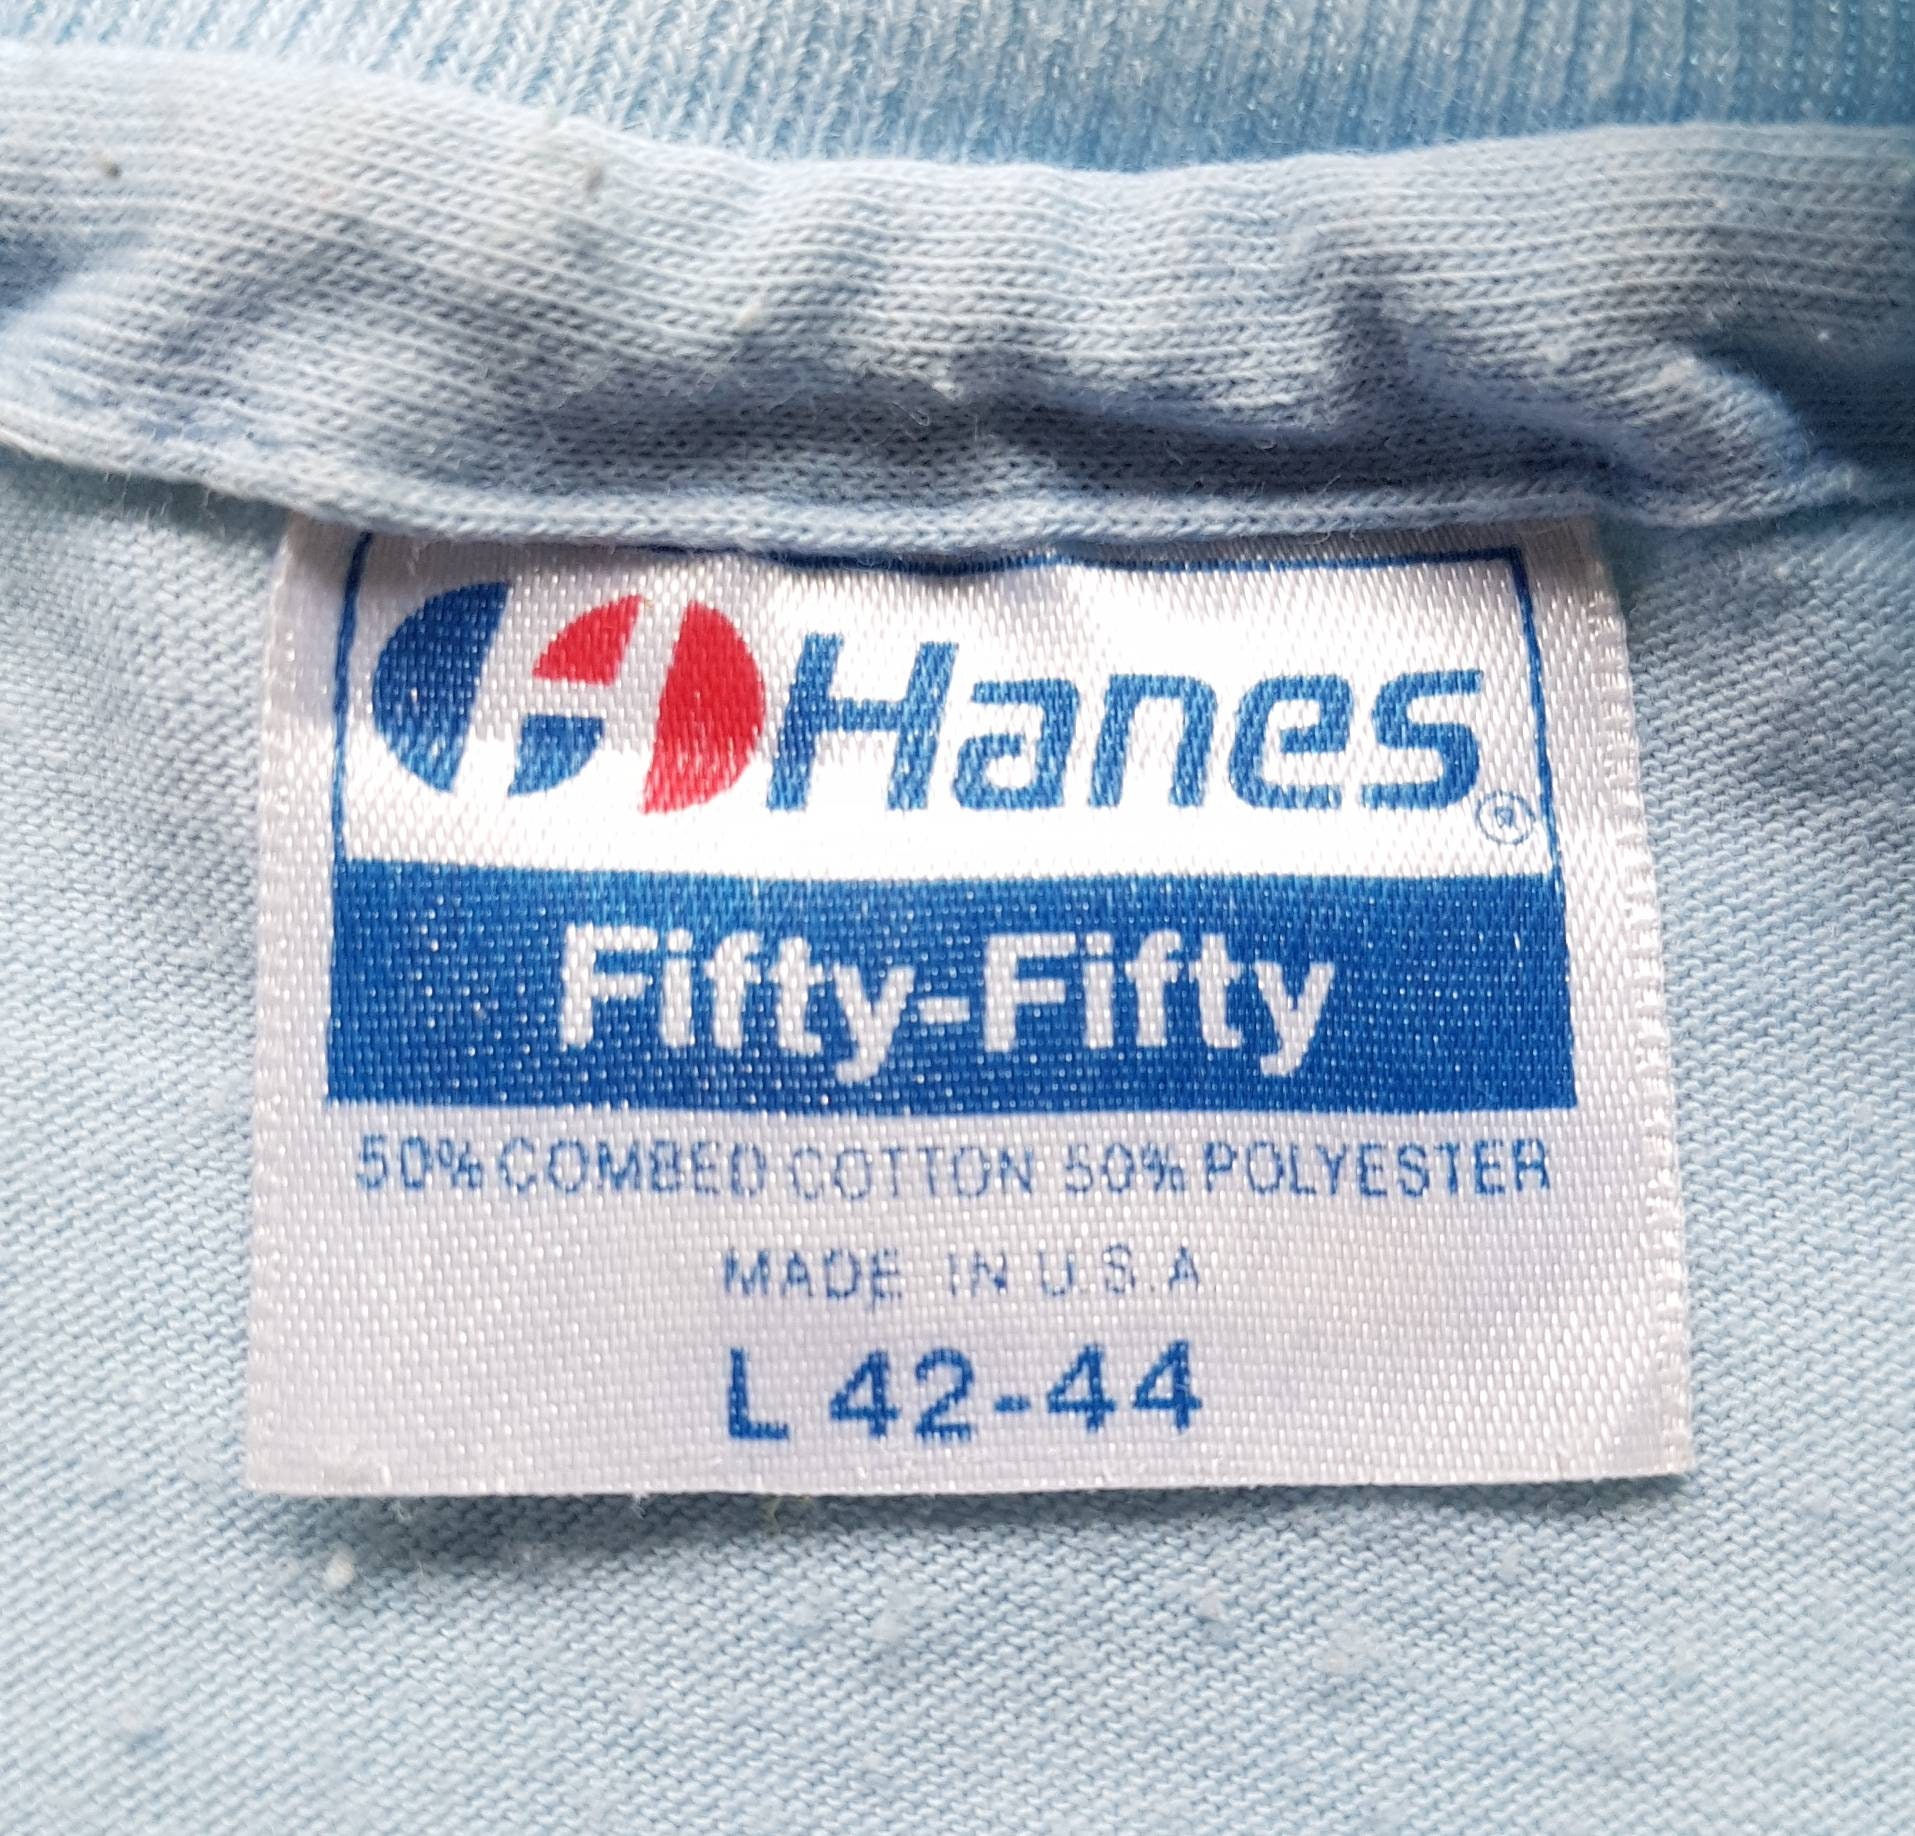 Vintage 80's Buddy Holly T Shirt Size L W 20 X L 28.5 - Etsy